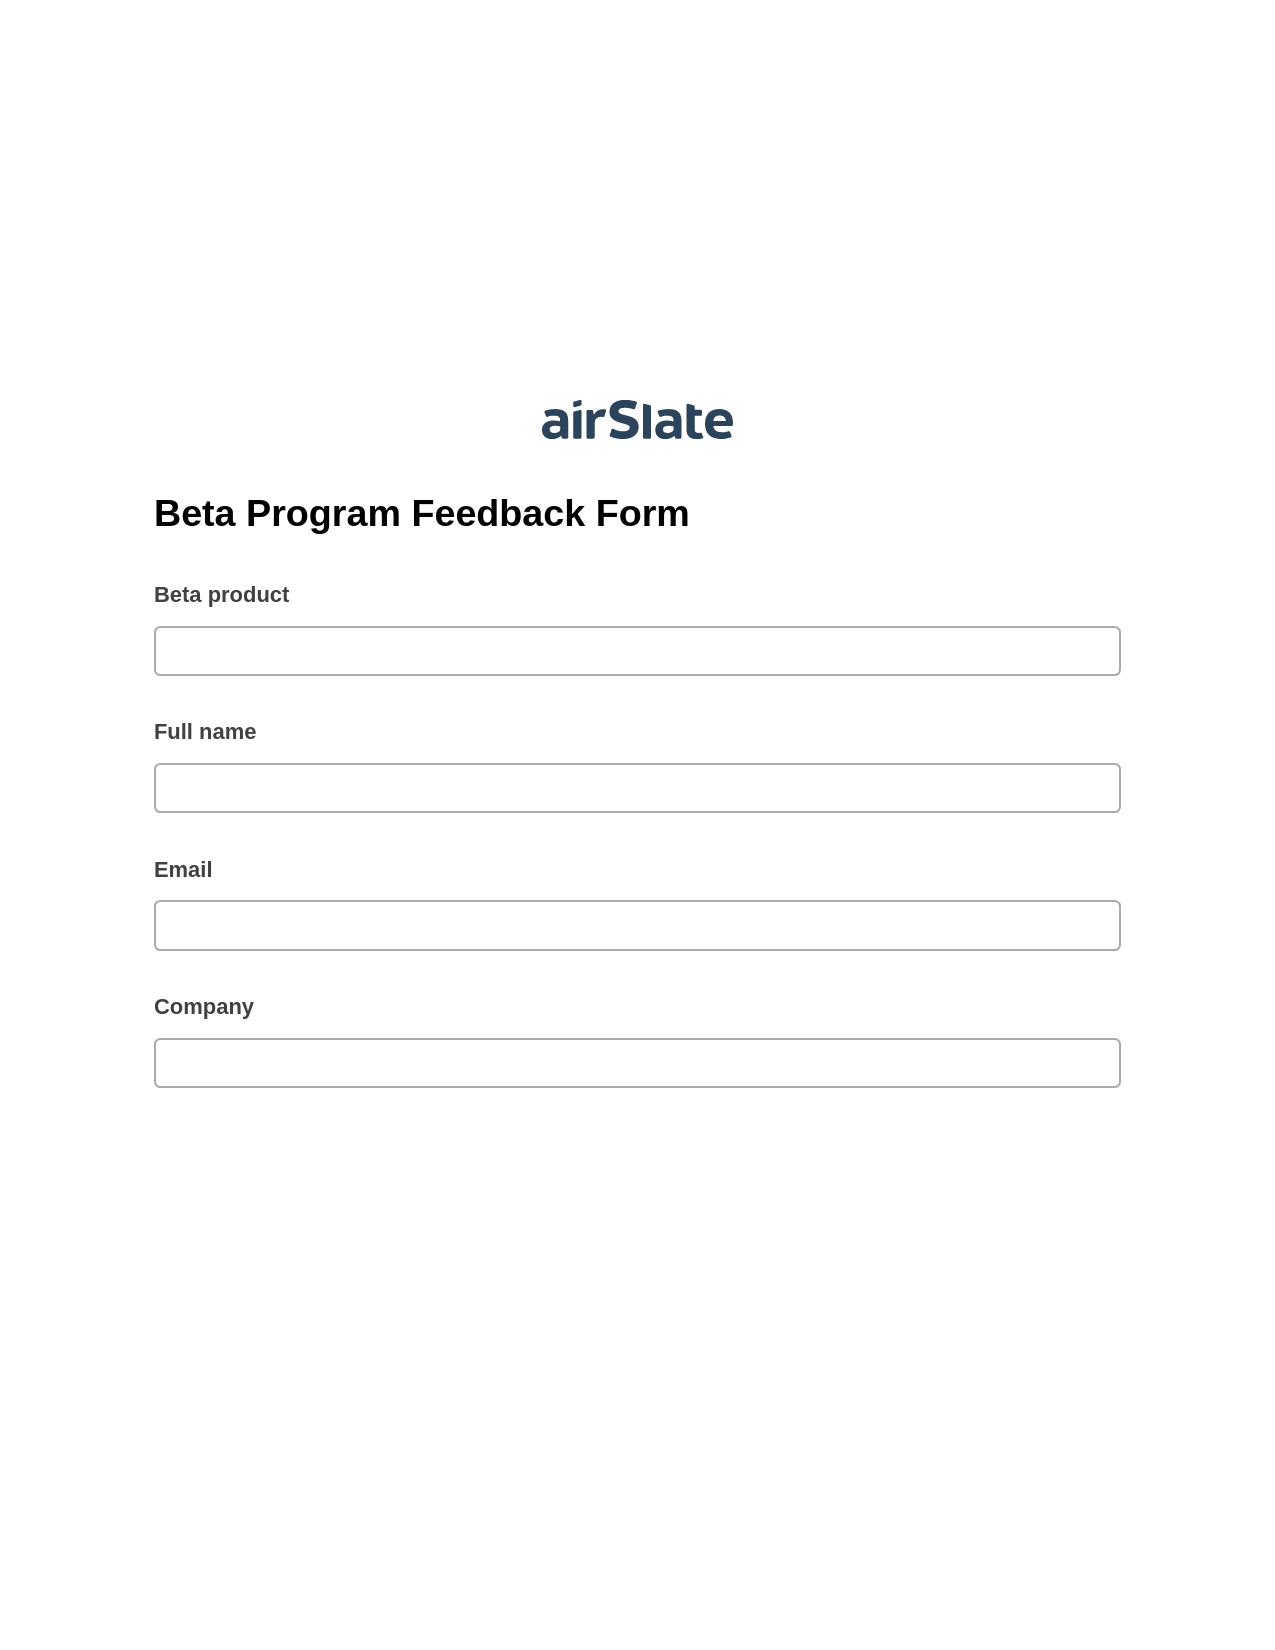 Multirole Beta Program Feedback Form Pre-fill from Salesforce Record Bot, Remove Slate Bot, Webhook Postfinish Bot